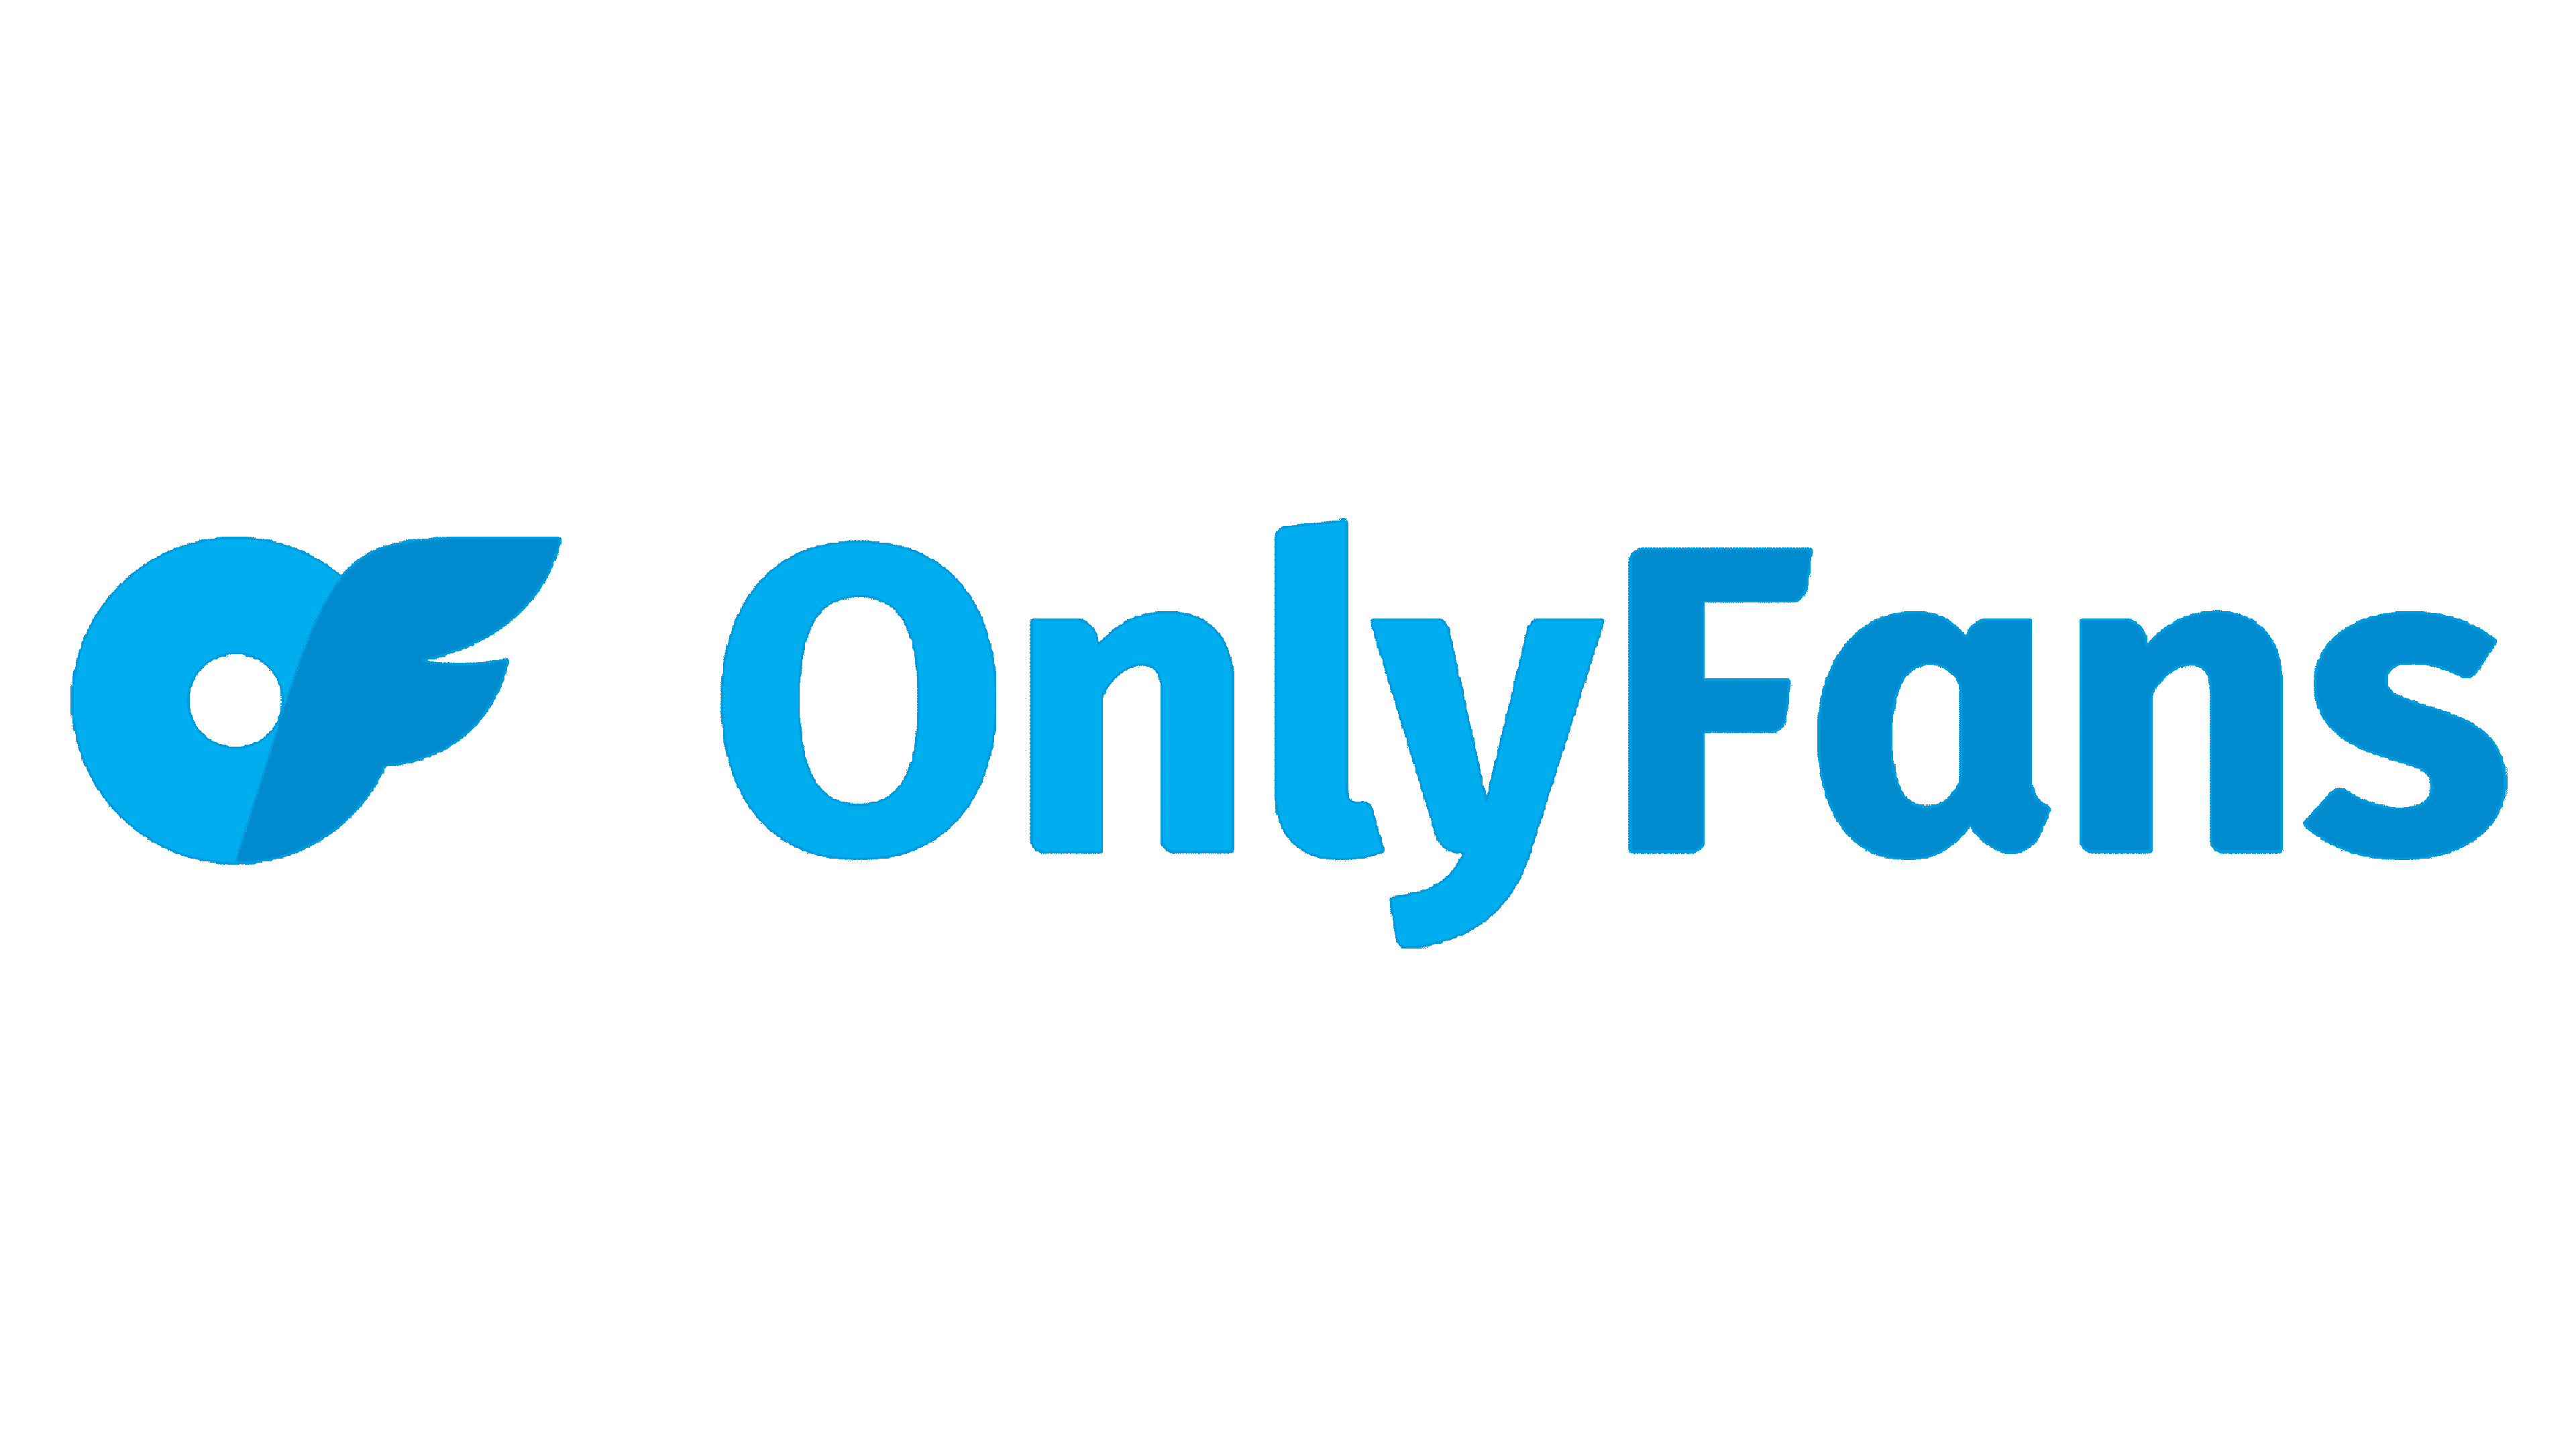 OnlyFans Logo Logo